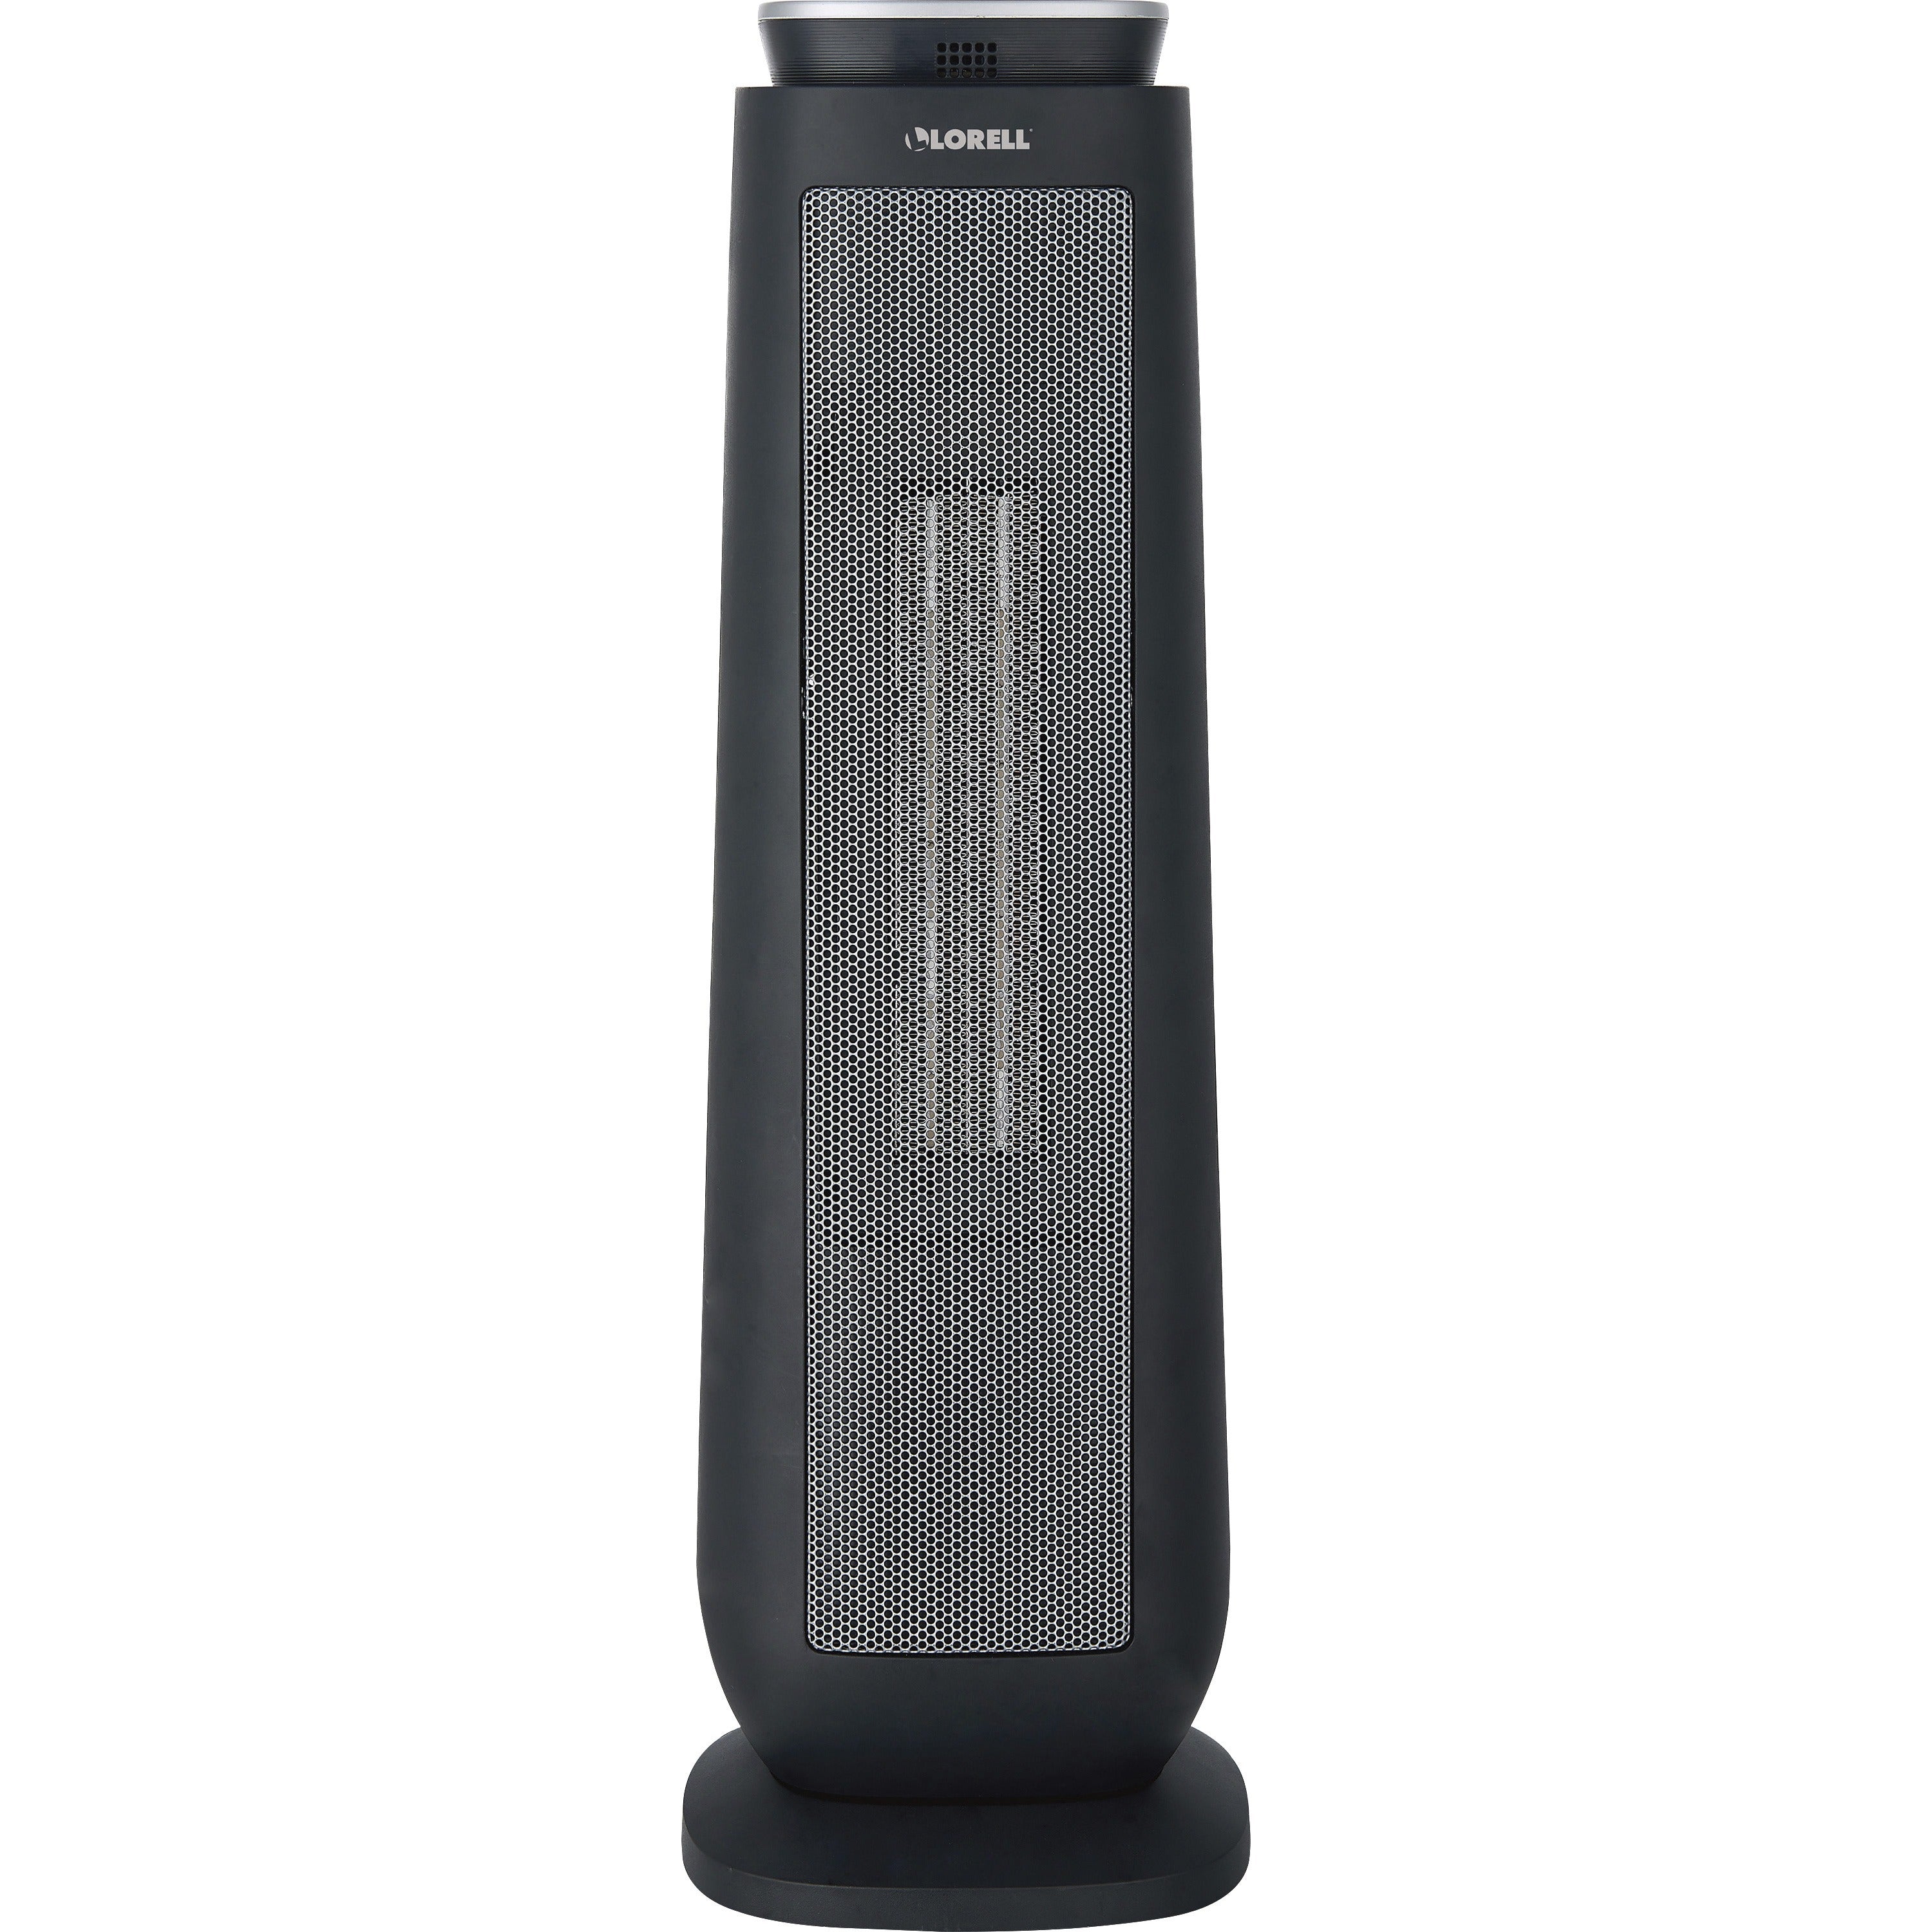 lorell-tower-heater-ceramic-electric-2-x-heat-settings-tower-black_llr00311 - 1